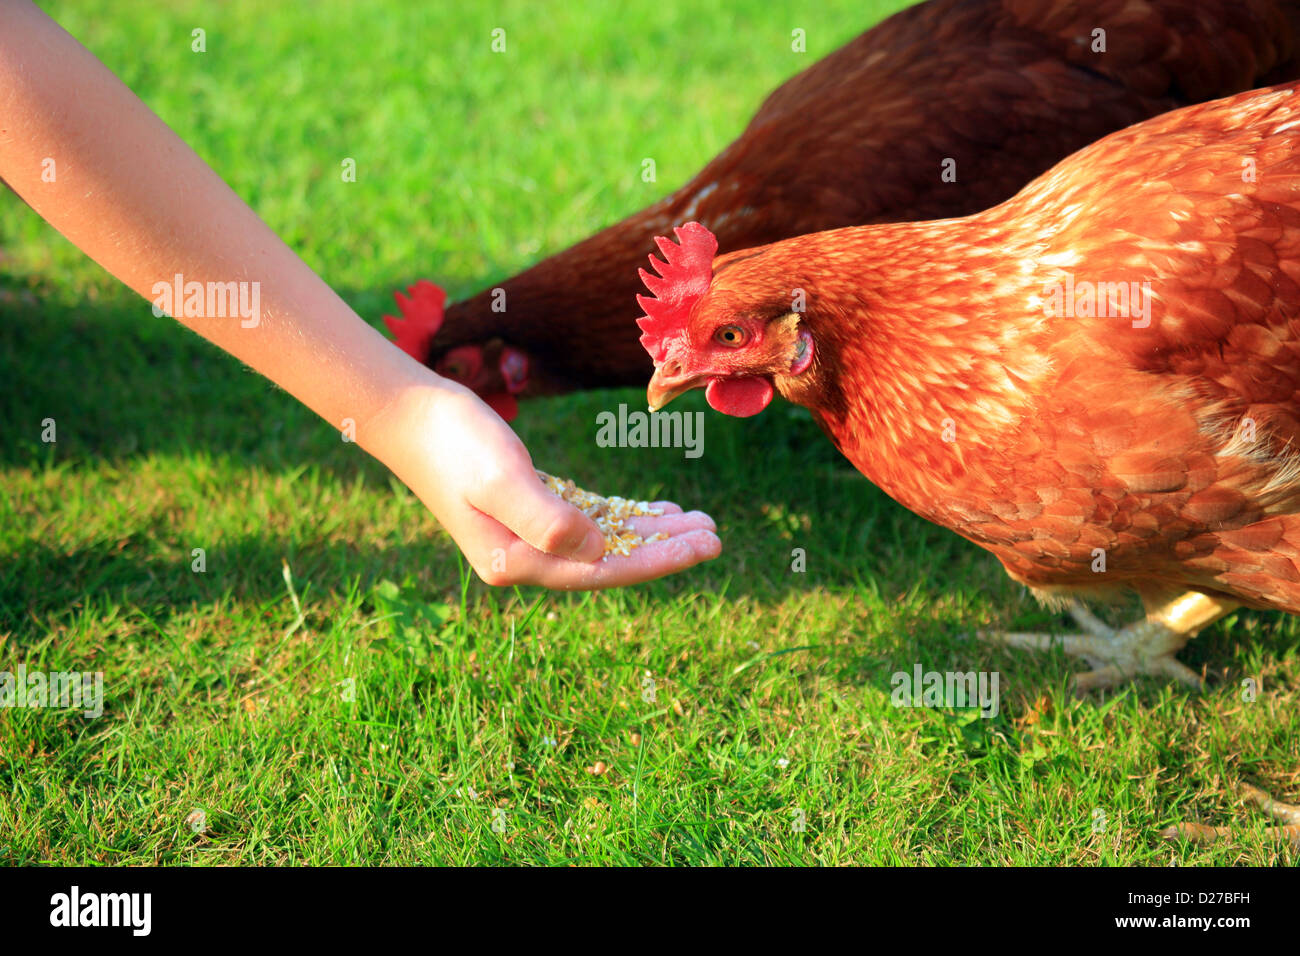 Chicken being fed by childs hand in garden Stock Photo